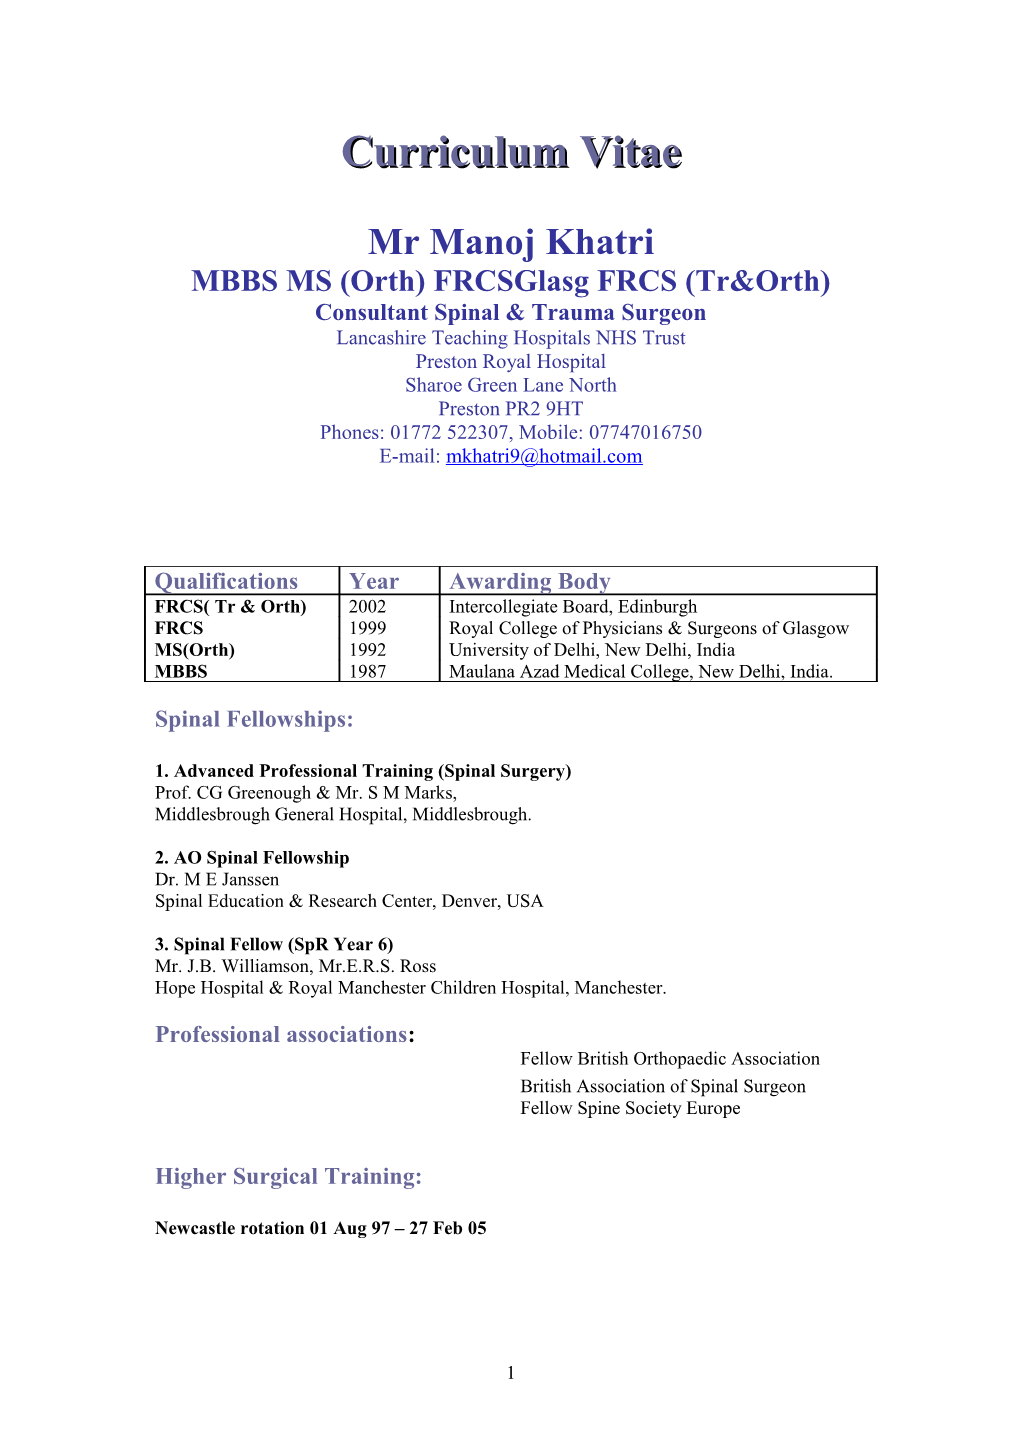 MBBS MS (Orth) Frcsglasg FRCS (Tr&Orth)